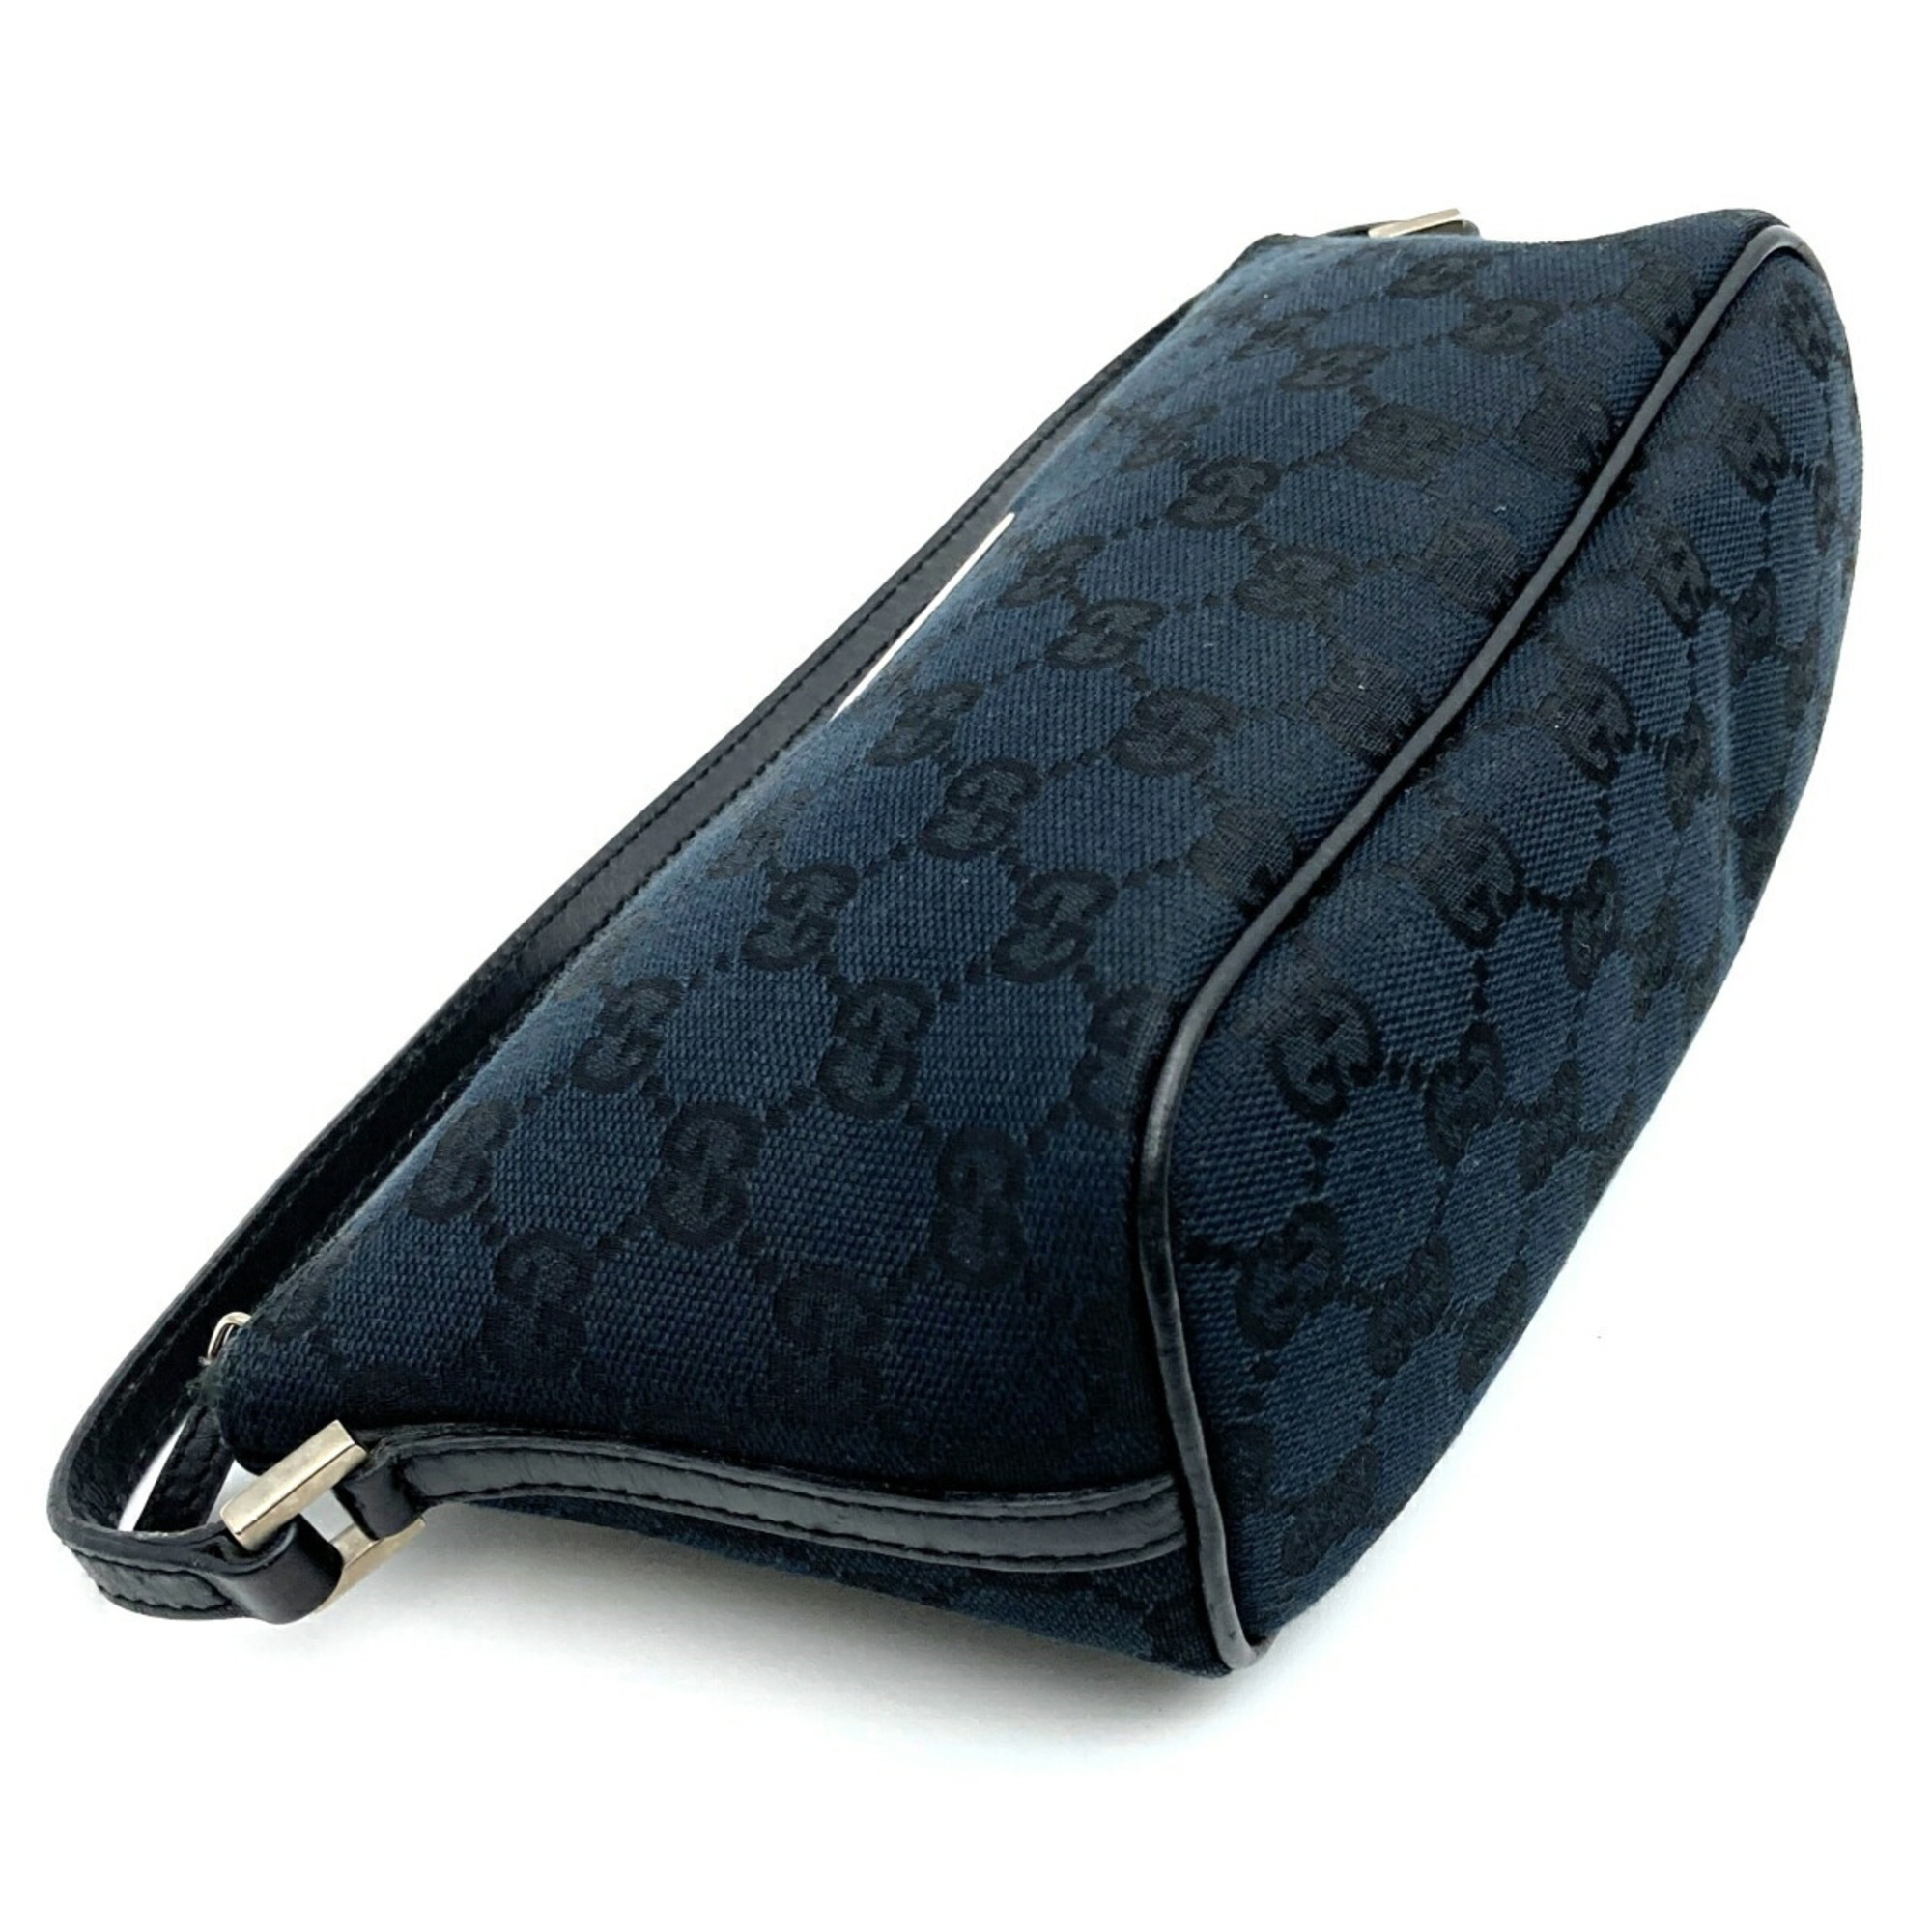 GUCCI Gucci GG pattern handbag accessory pouch mini bag black ladies fashion 039 1108 USED